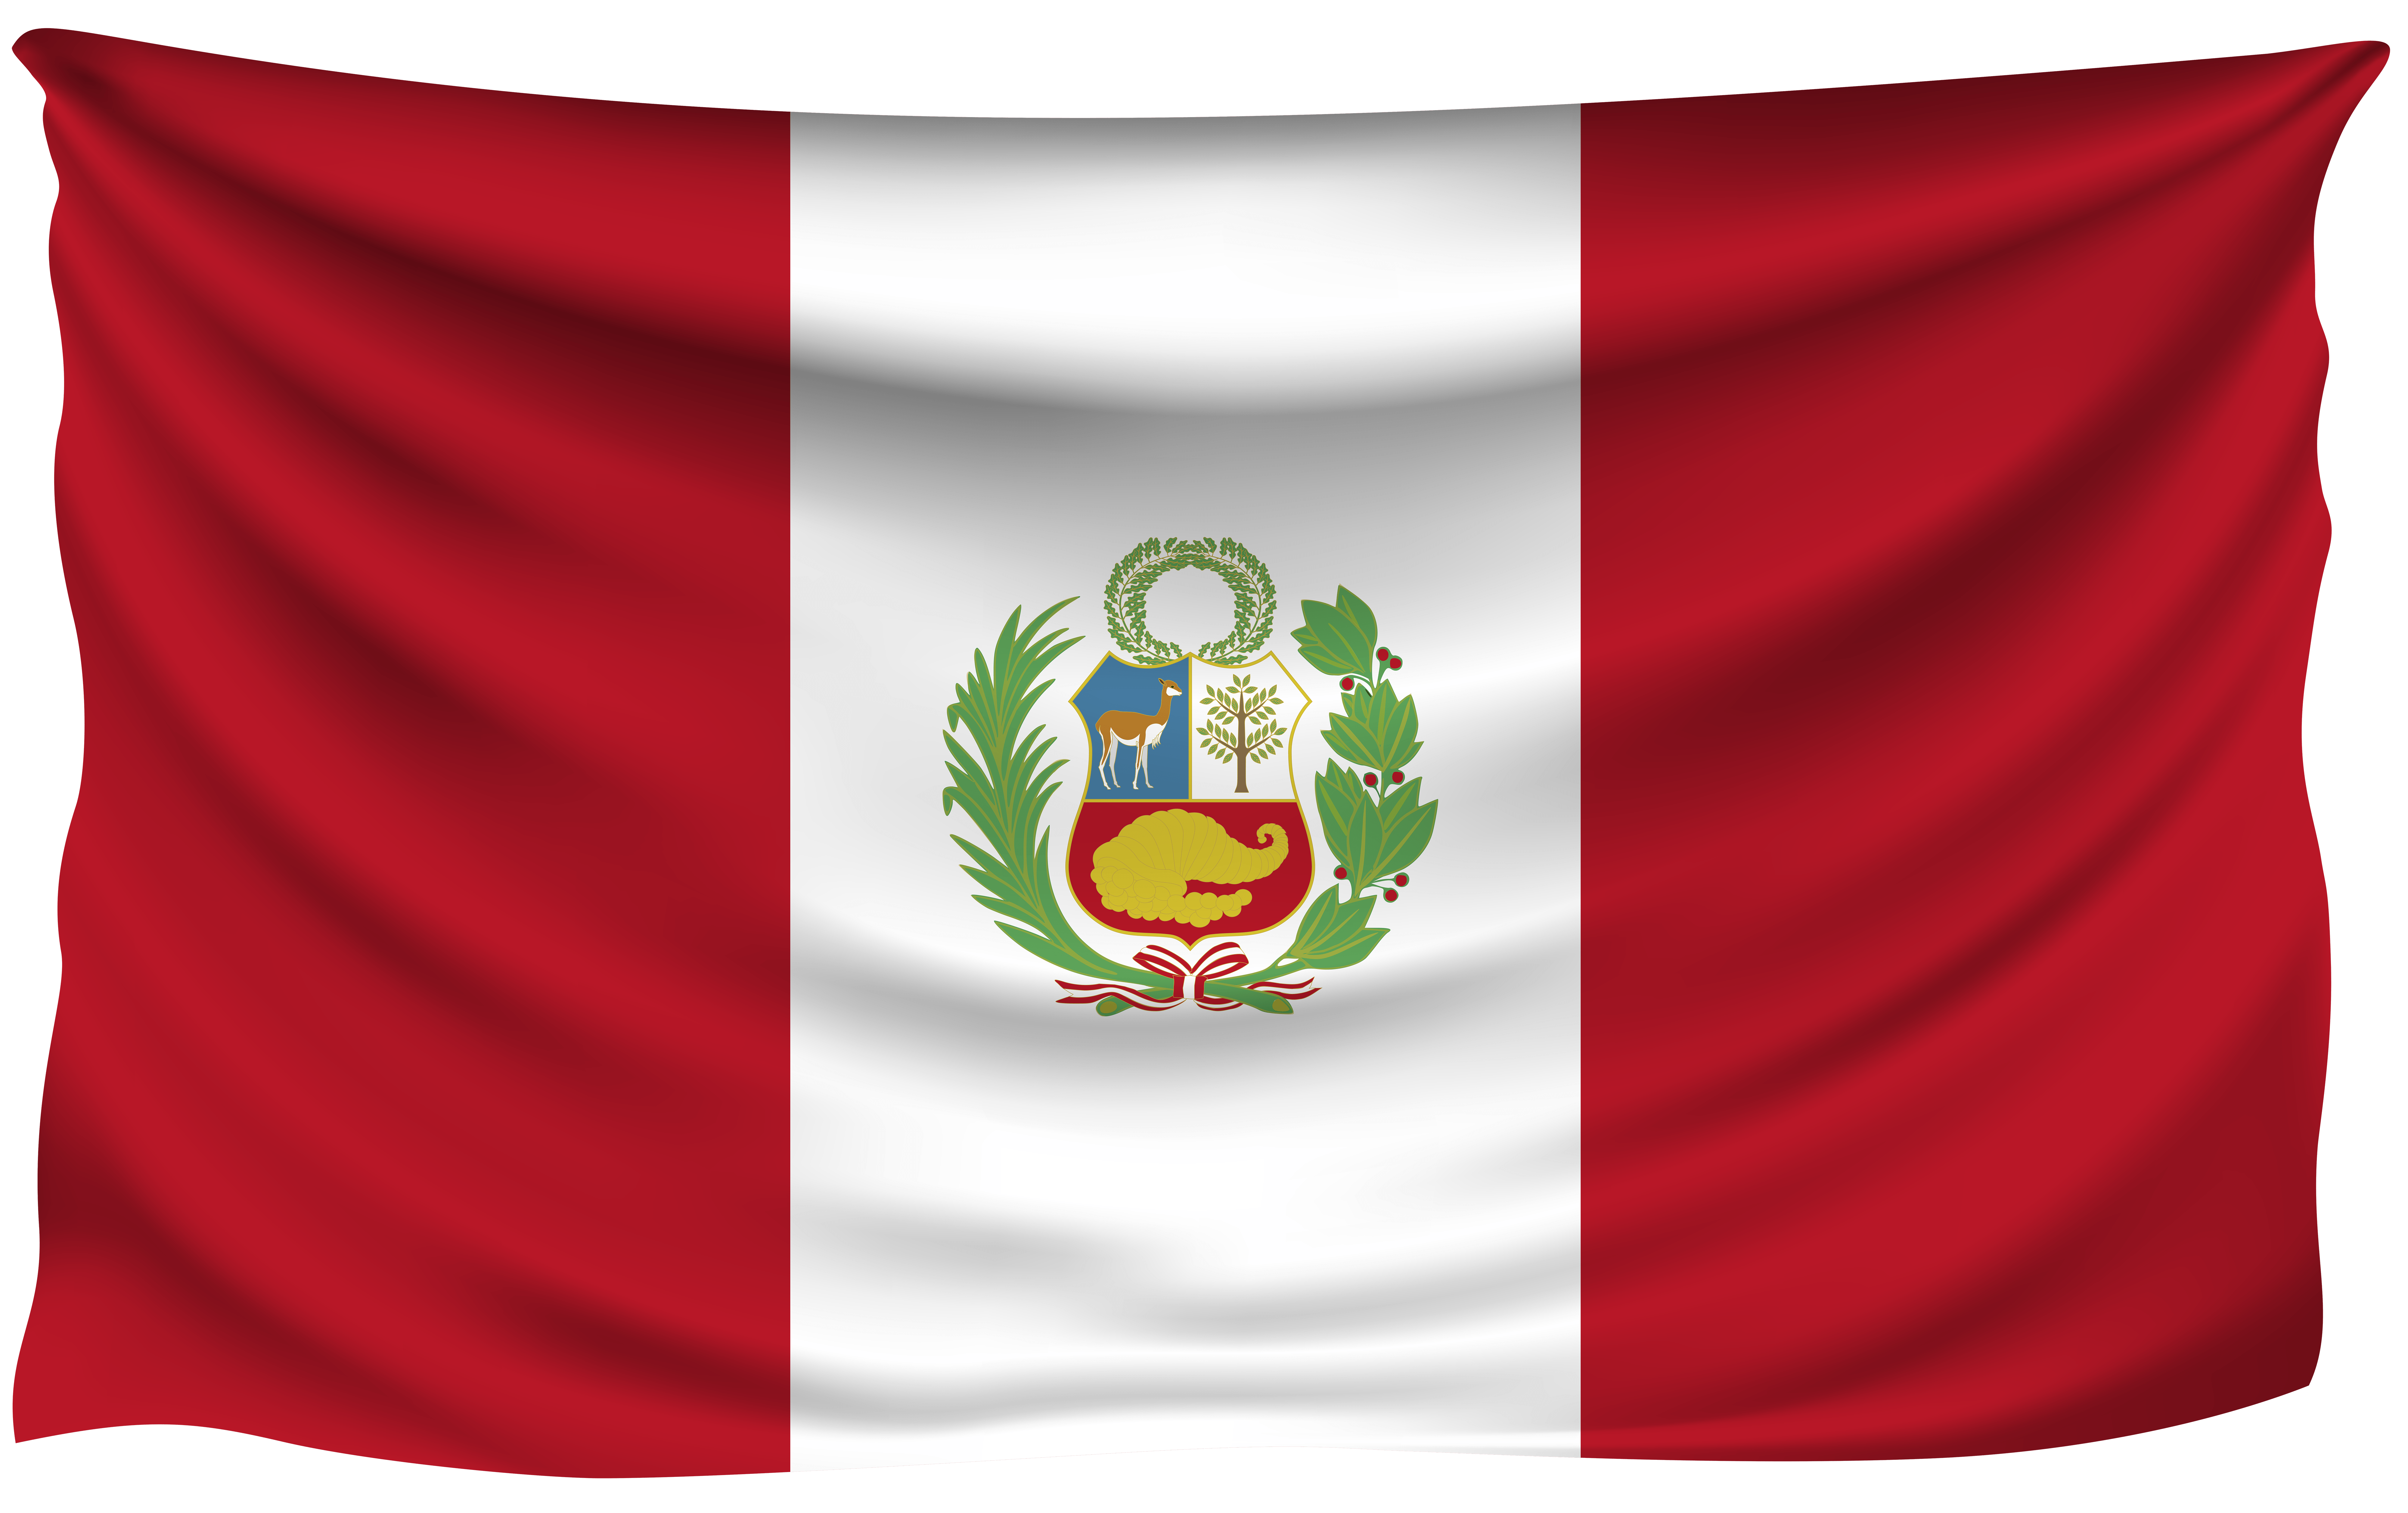 Bandera Peruana En Png | Images and Photos finder